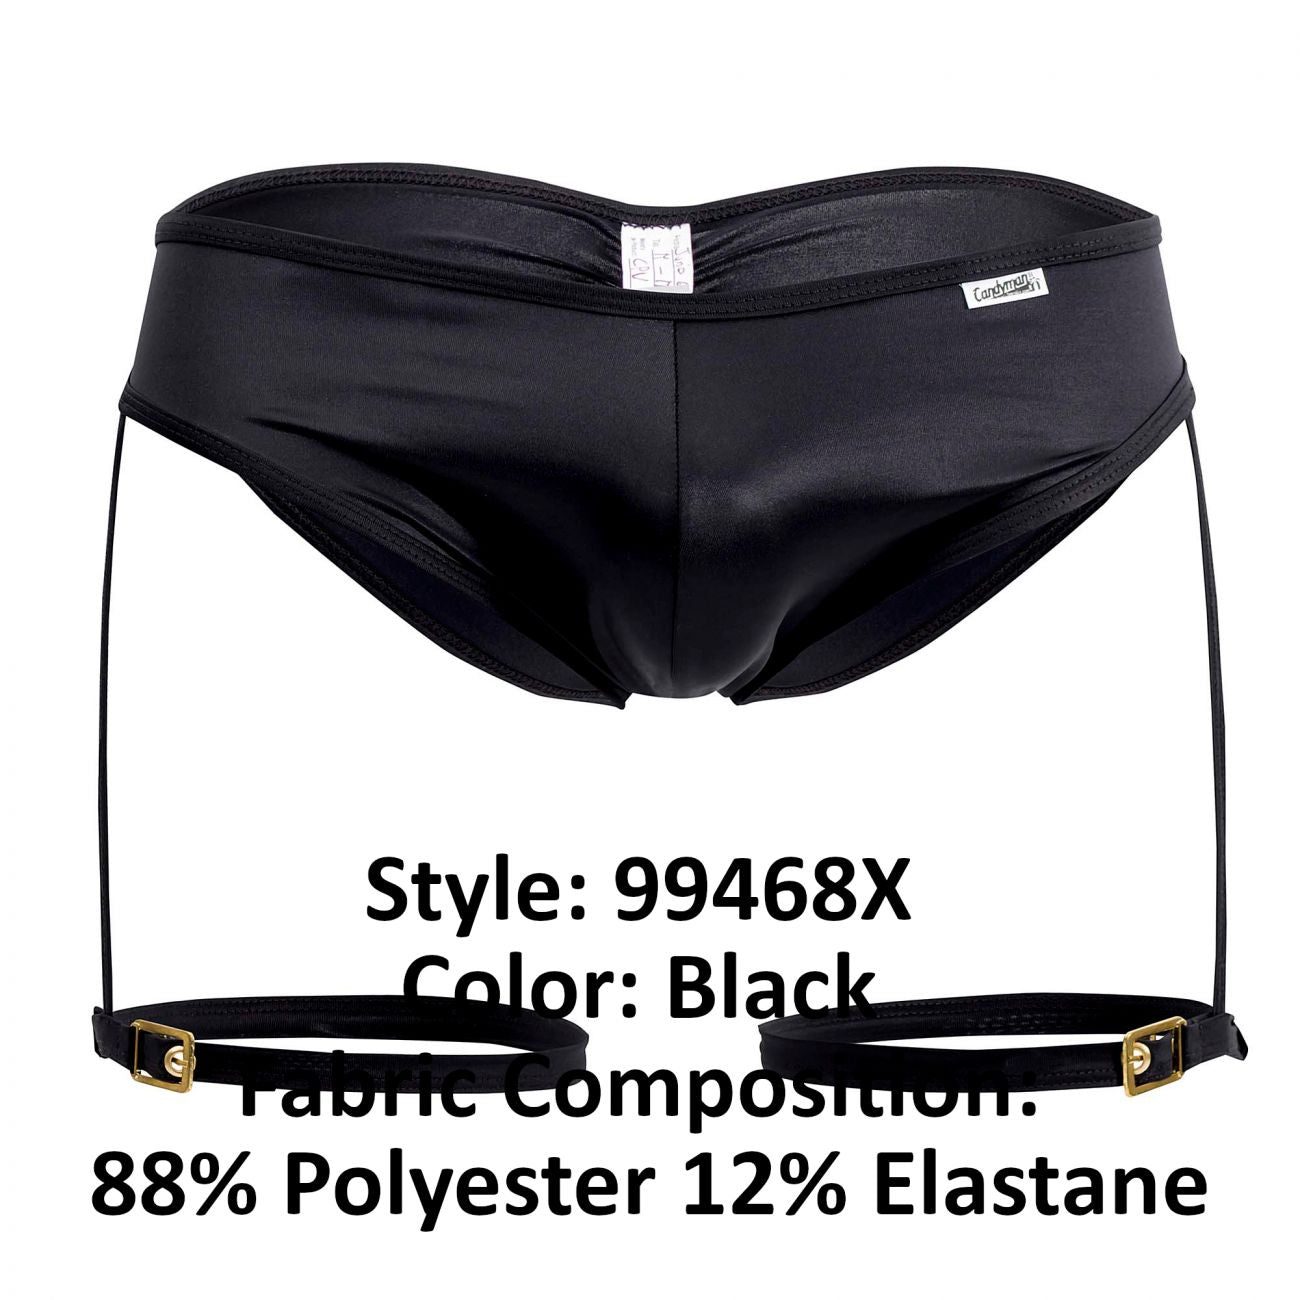 CandyMan 99468X Garter Briefs Color Black